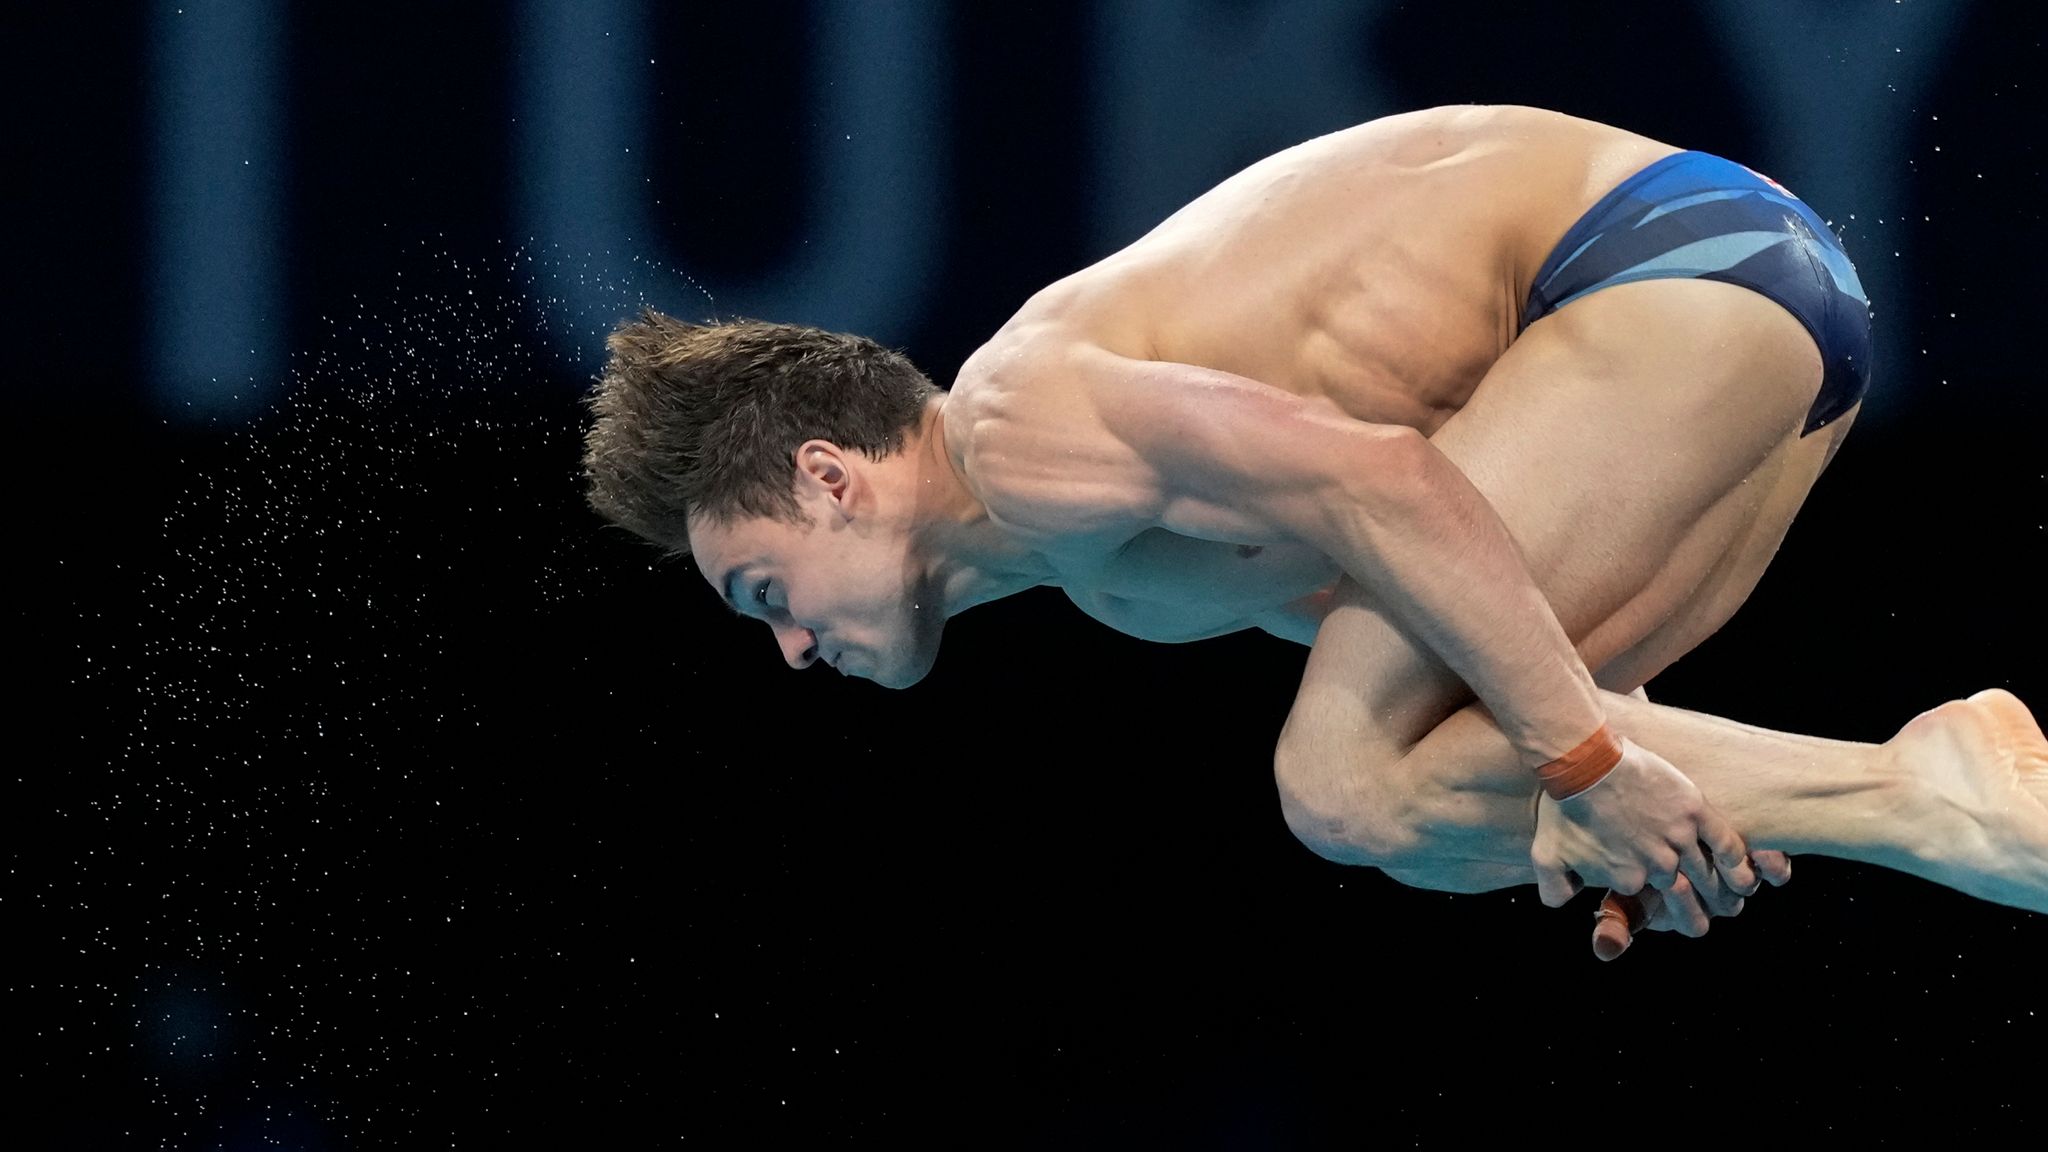 Tokyo 2020 Olympics: Tom Daley wins bronze medal in 10m individual platform